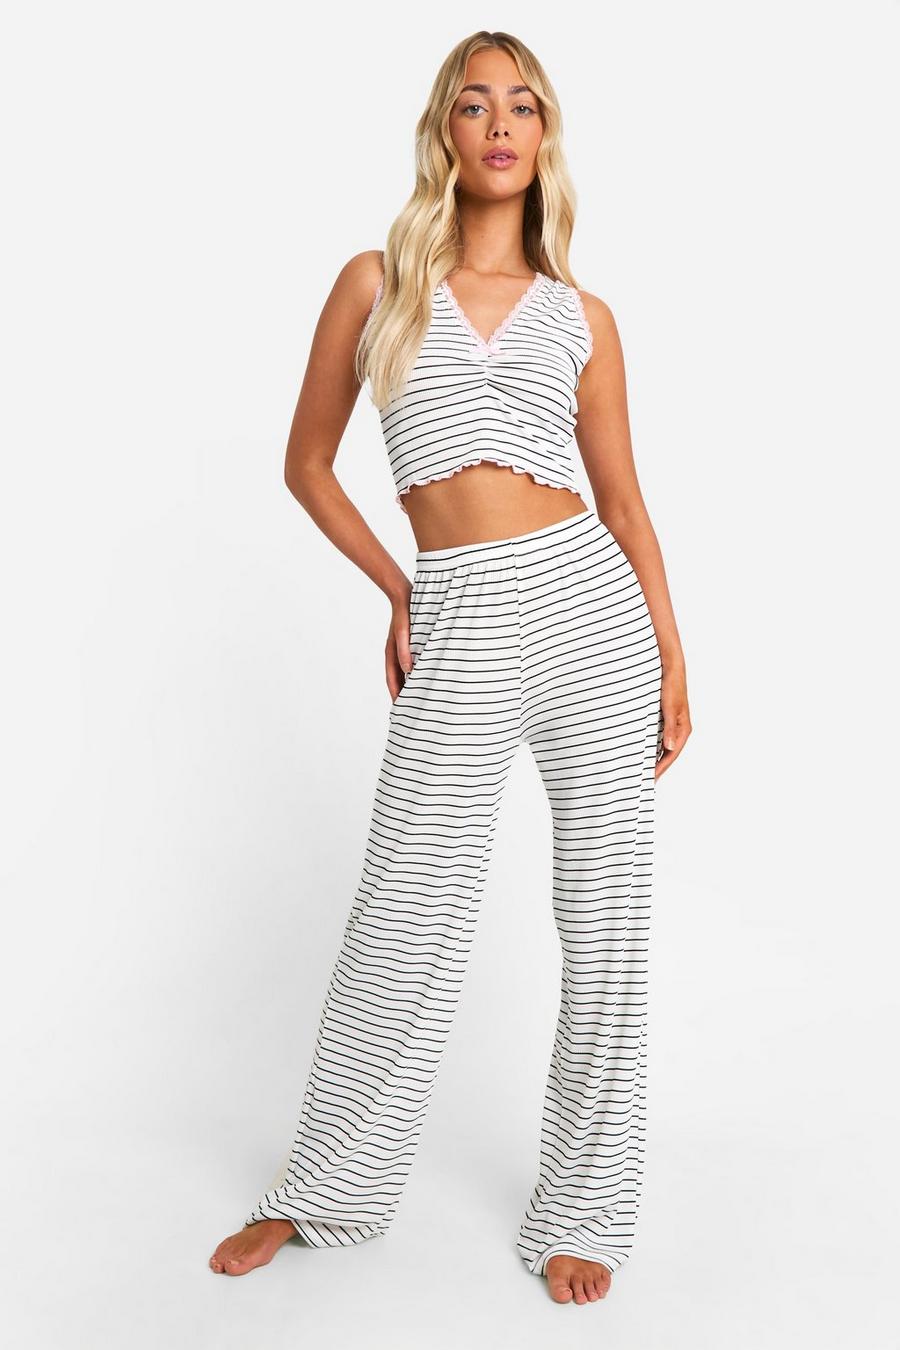 Cream Stripe Lace Tank Top And Pants Pajama Set